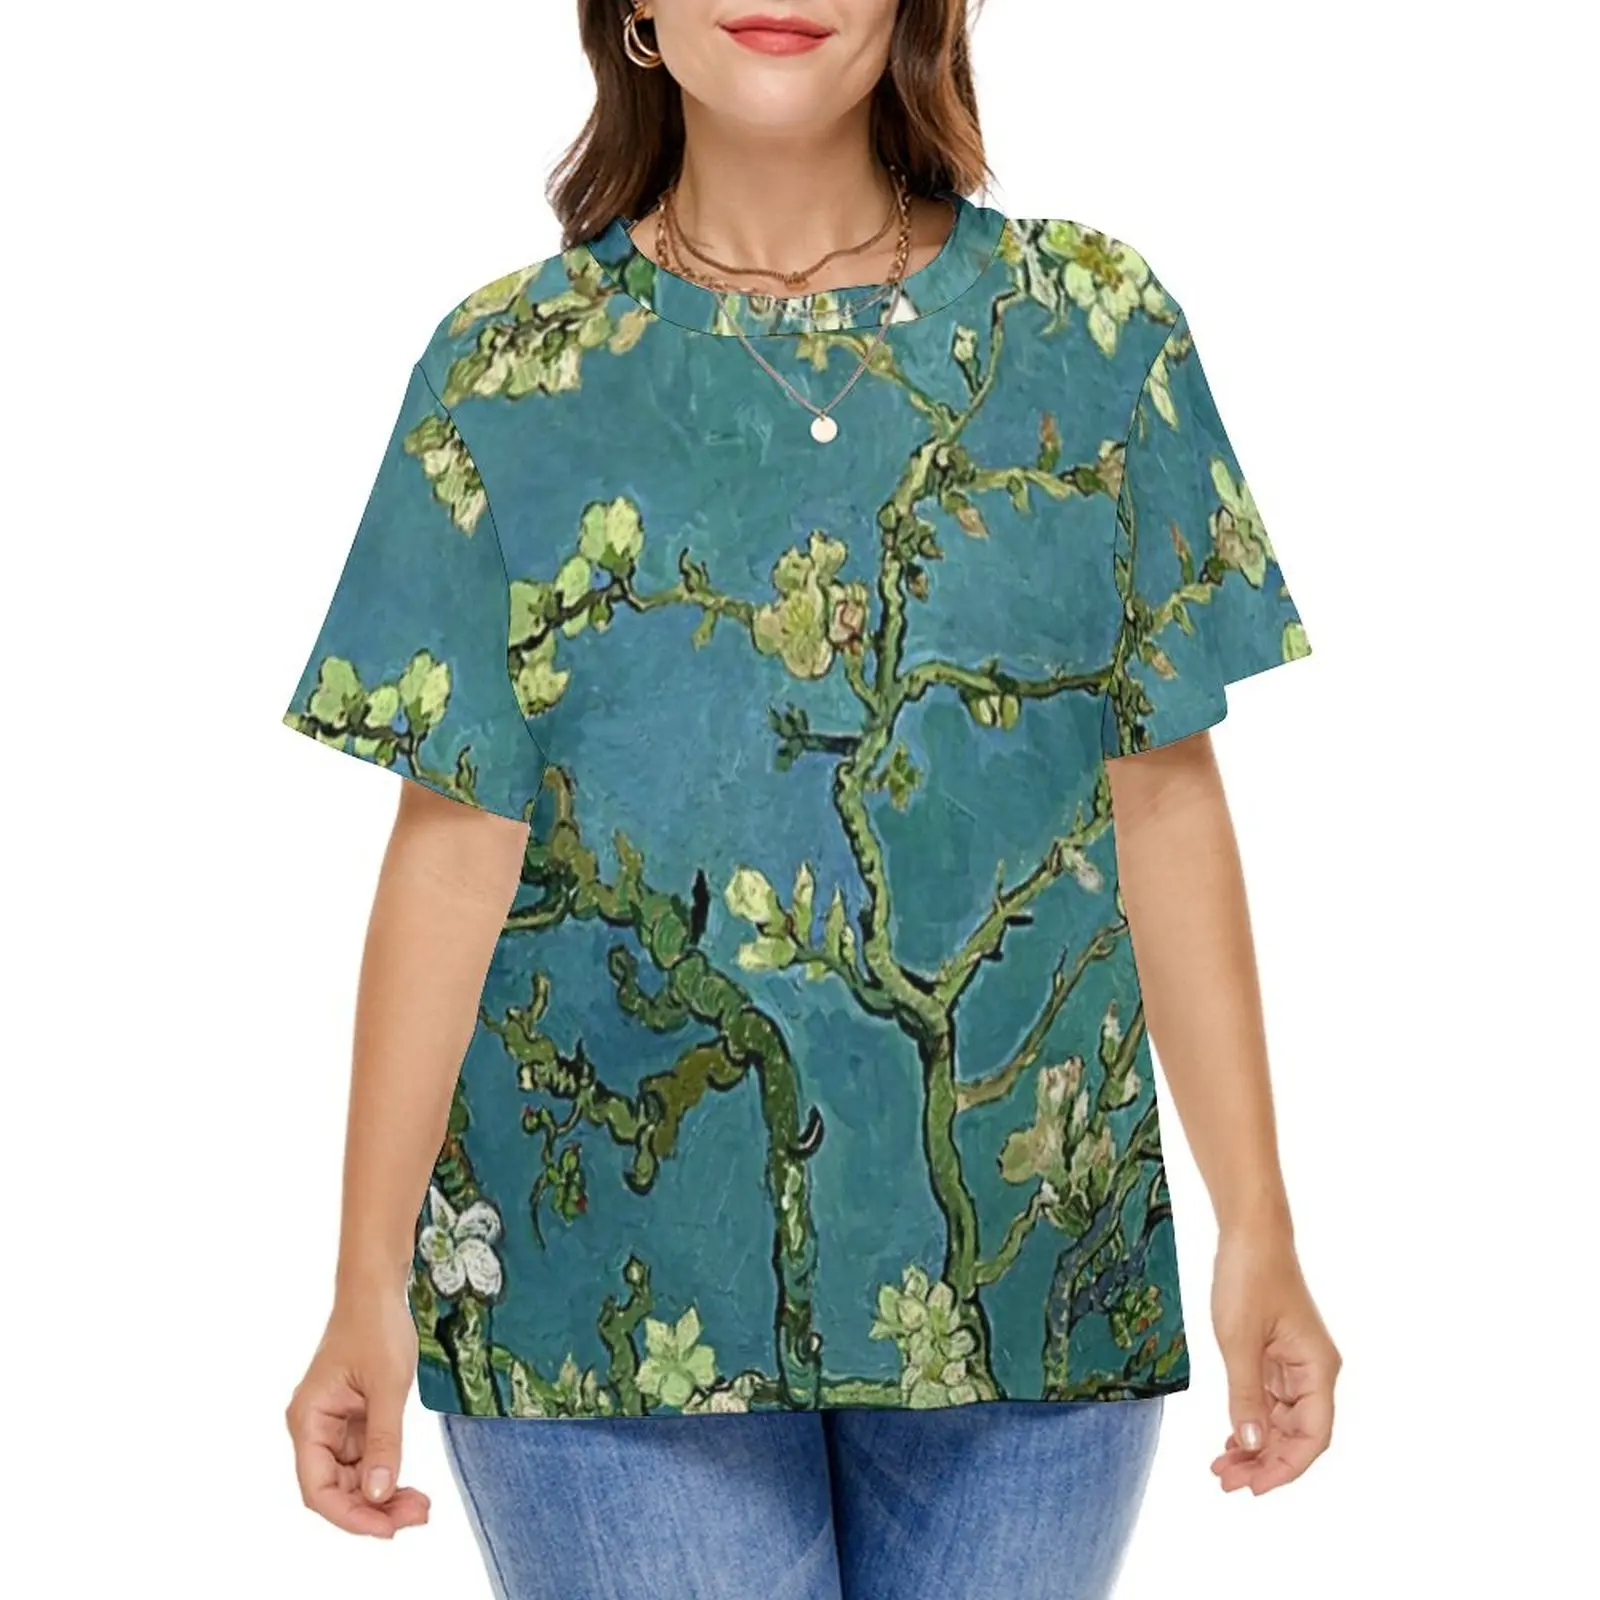 Floral Print Art T-Shirt Van Gogh Almond Blossoms Elegant T-Shirts Short Sleeve Streetwear Tee Shirt Summer Top Tees Plus Size